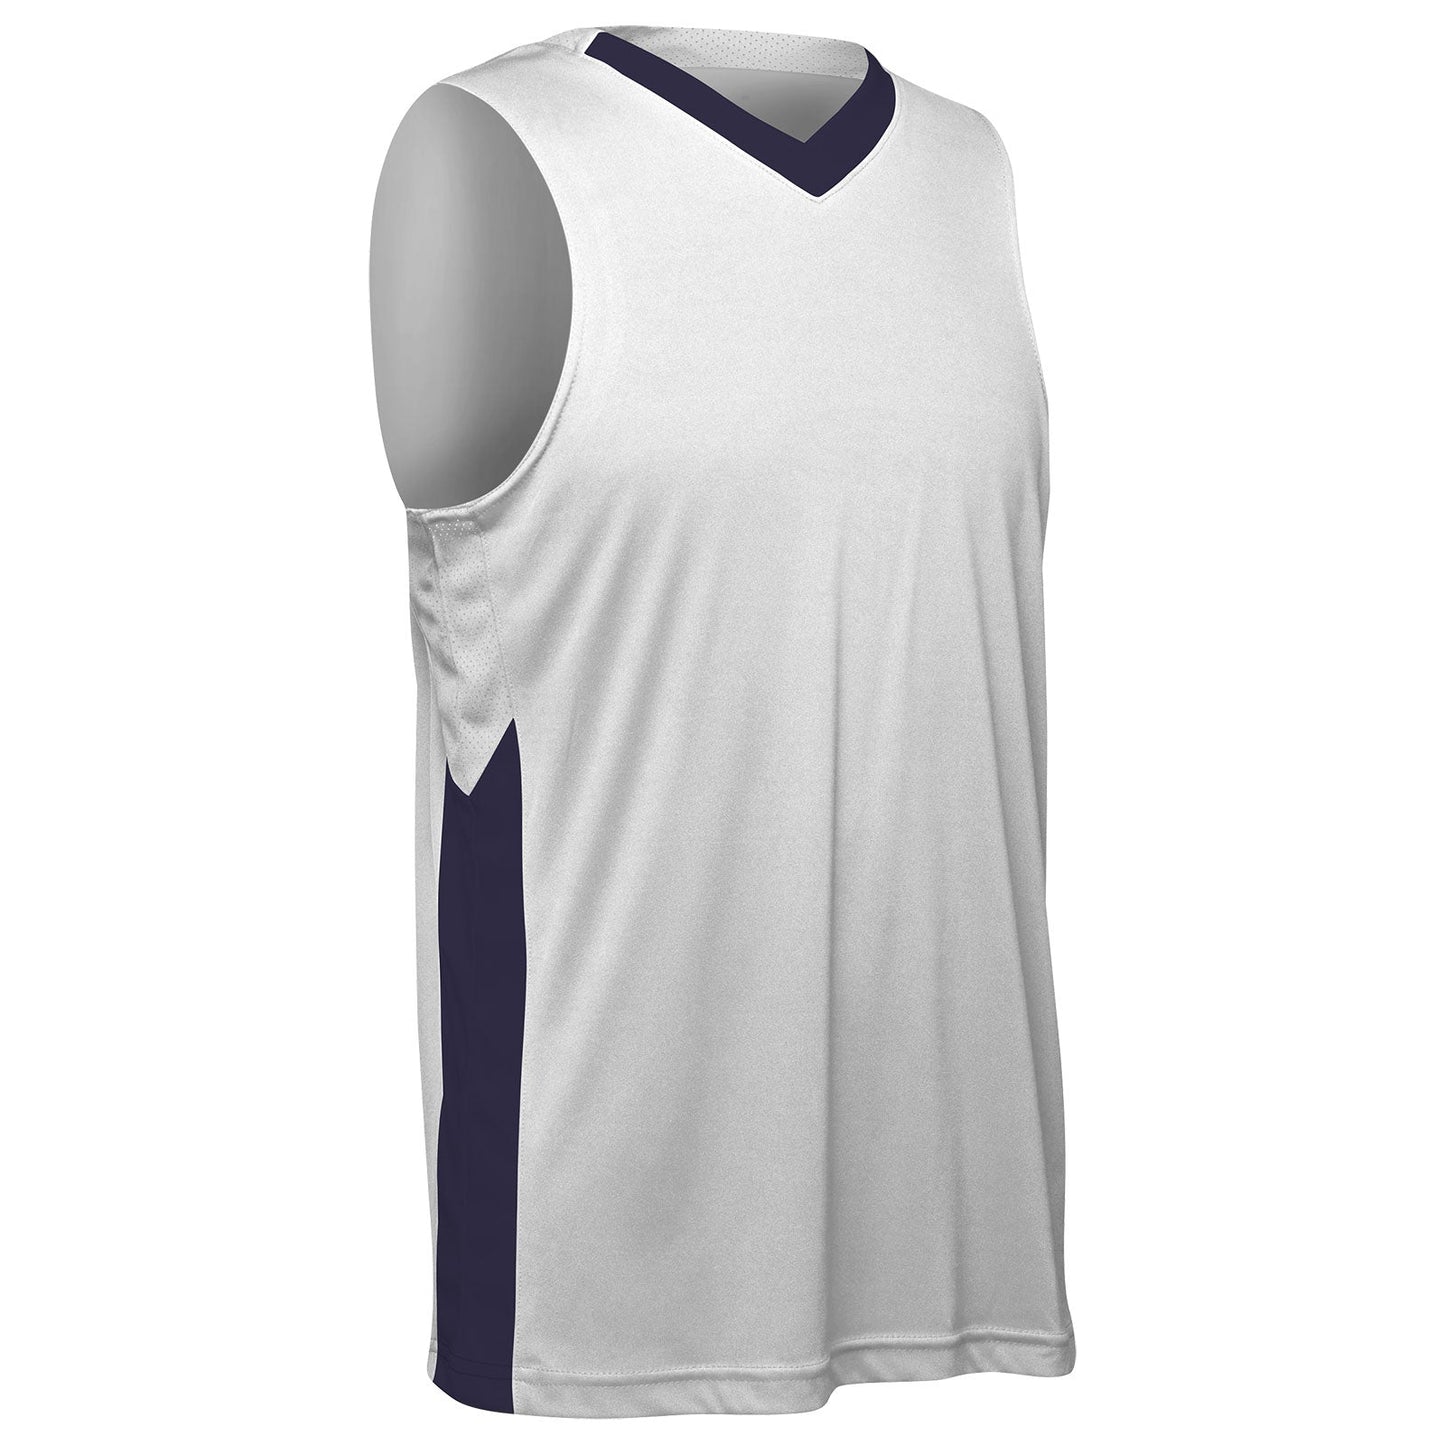 Icon 2 Color V-Neck Moisture Wicking Men's Basketball Jersey